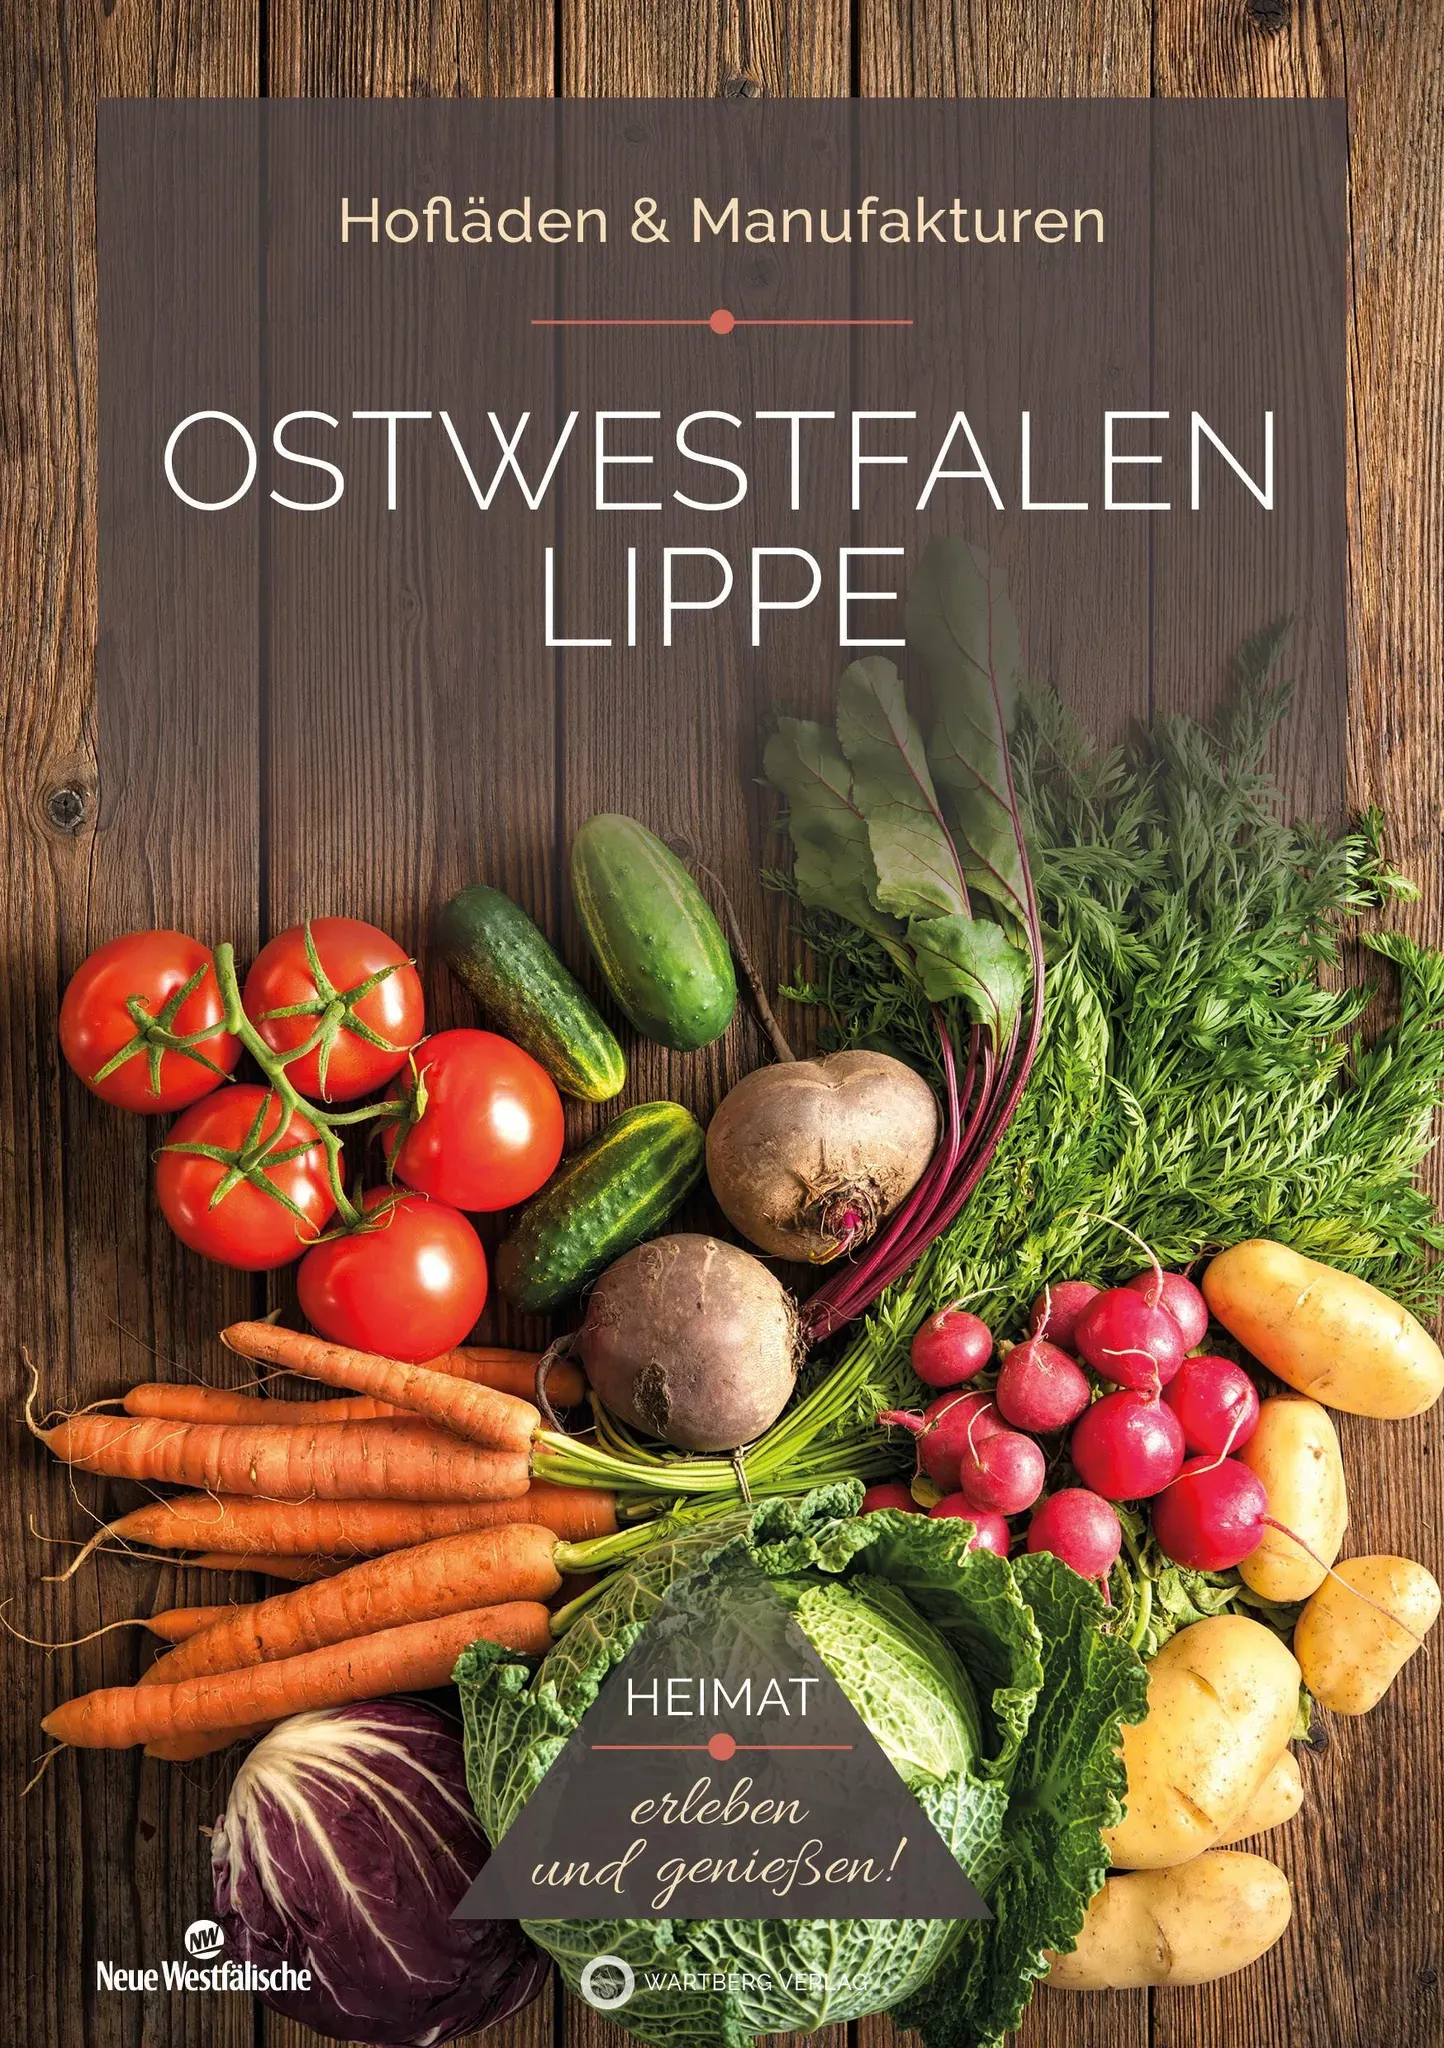 Ostwestfalen Lippe (Owl) - Hofläden & Manufakturen - Matthias Rickling  Taschenbuch